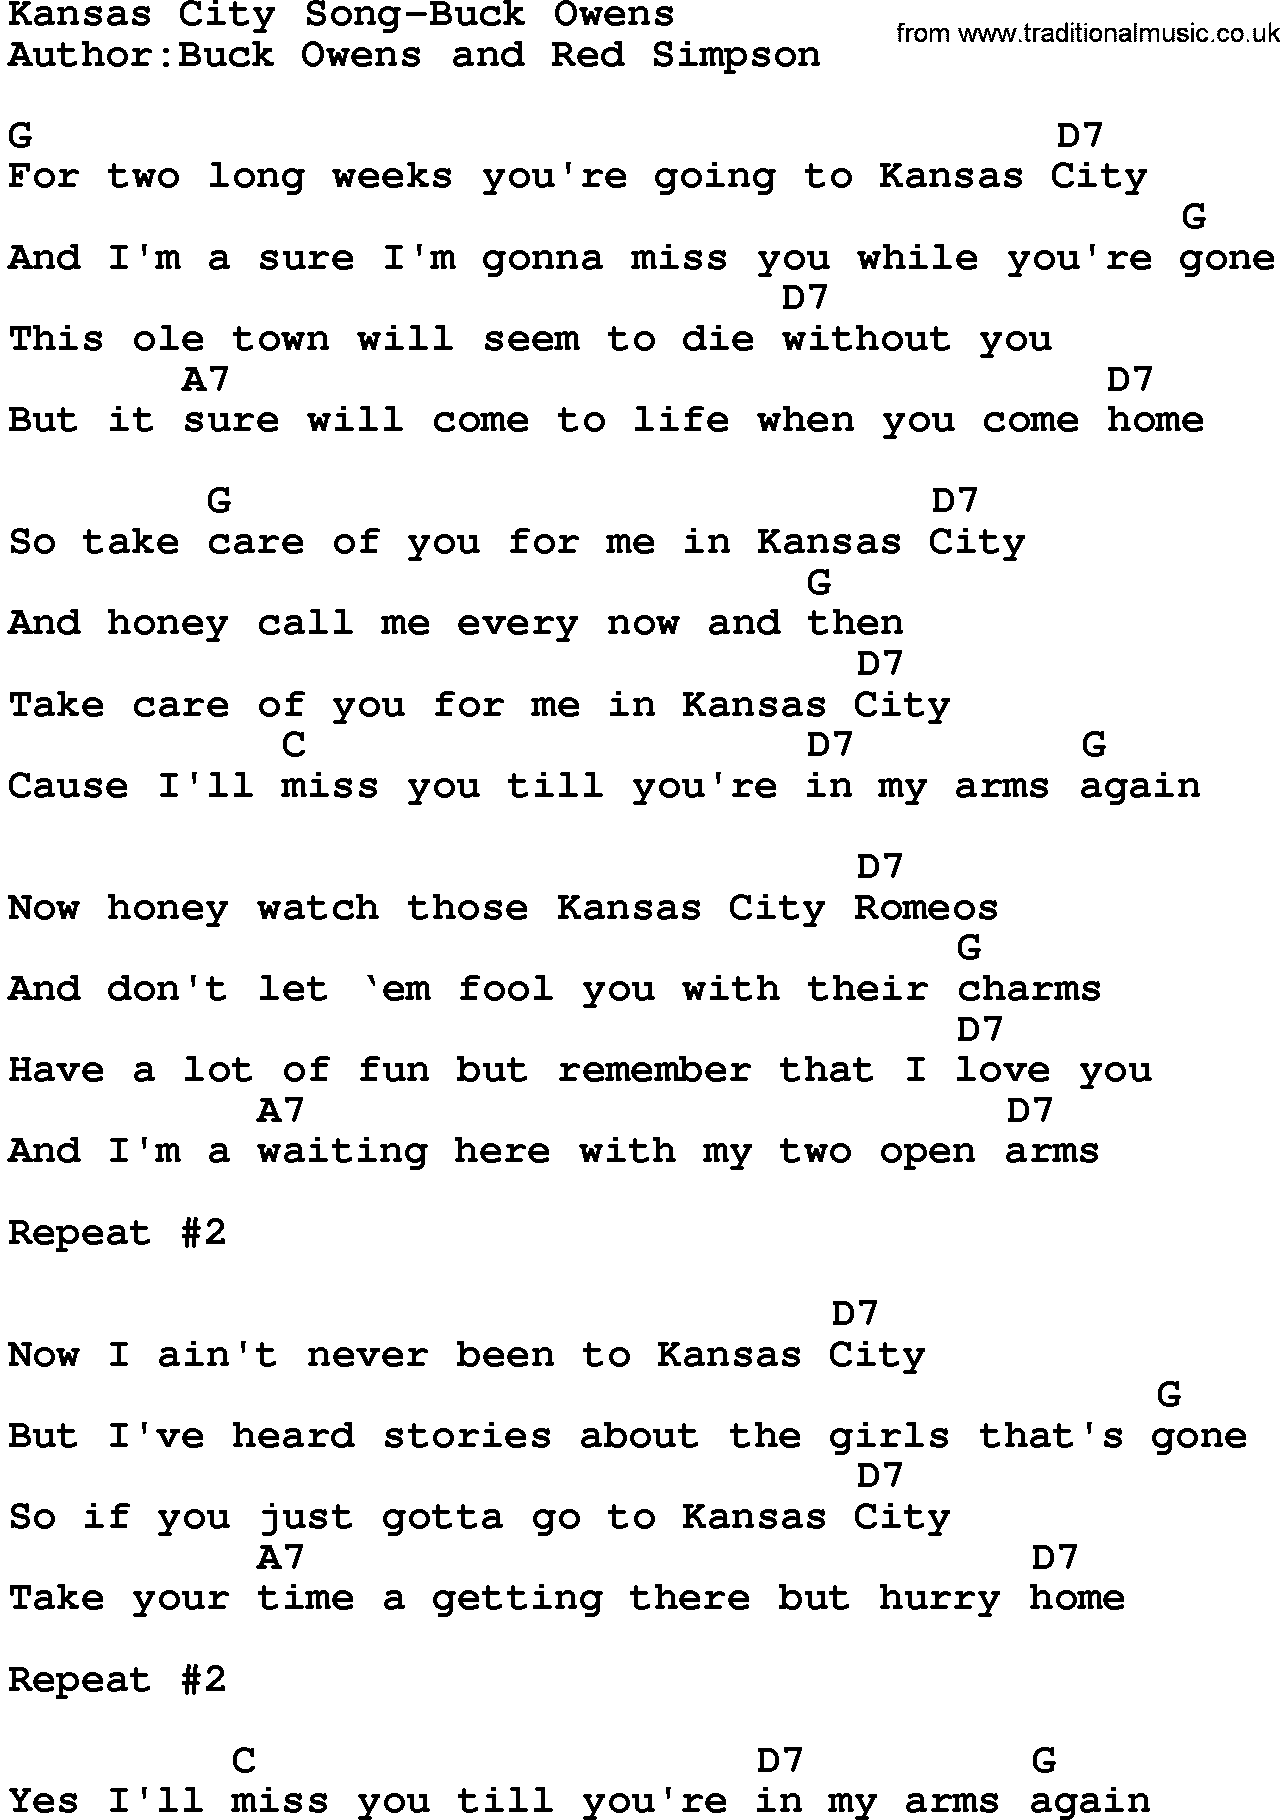 Country music song: Kansas City Song-Buck Owens lyrics and chords